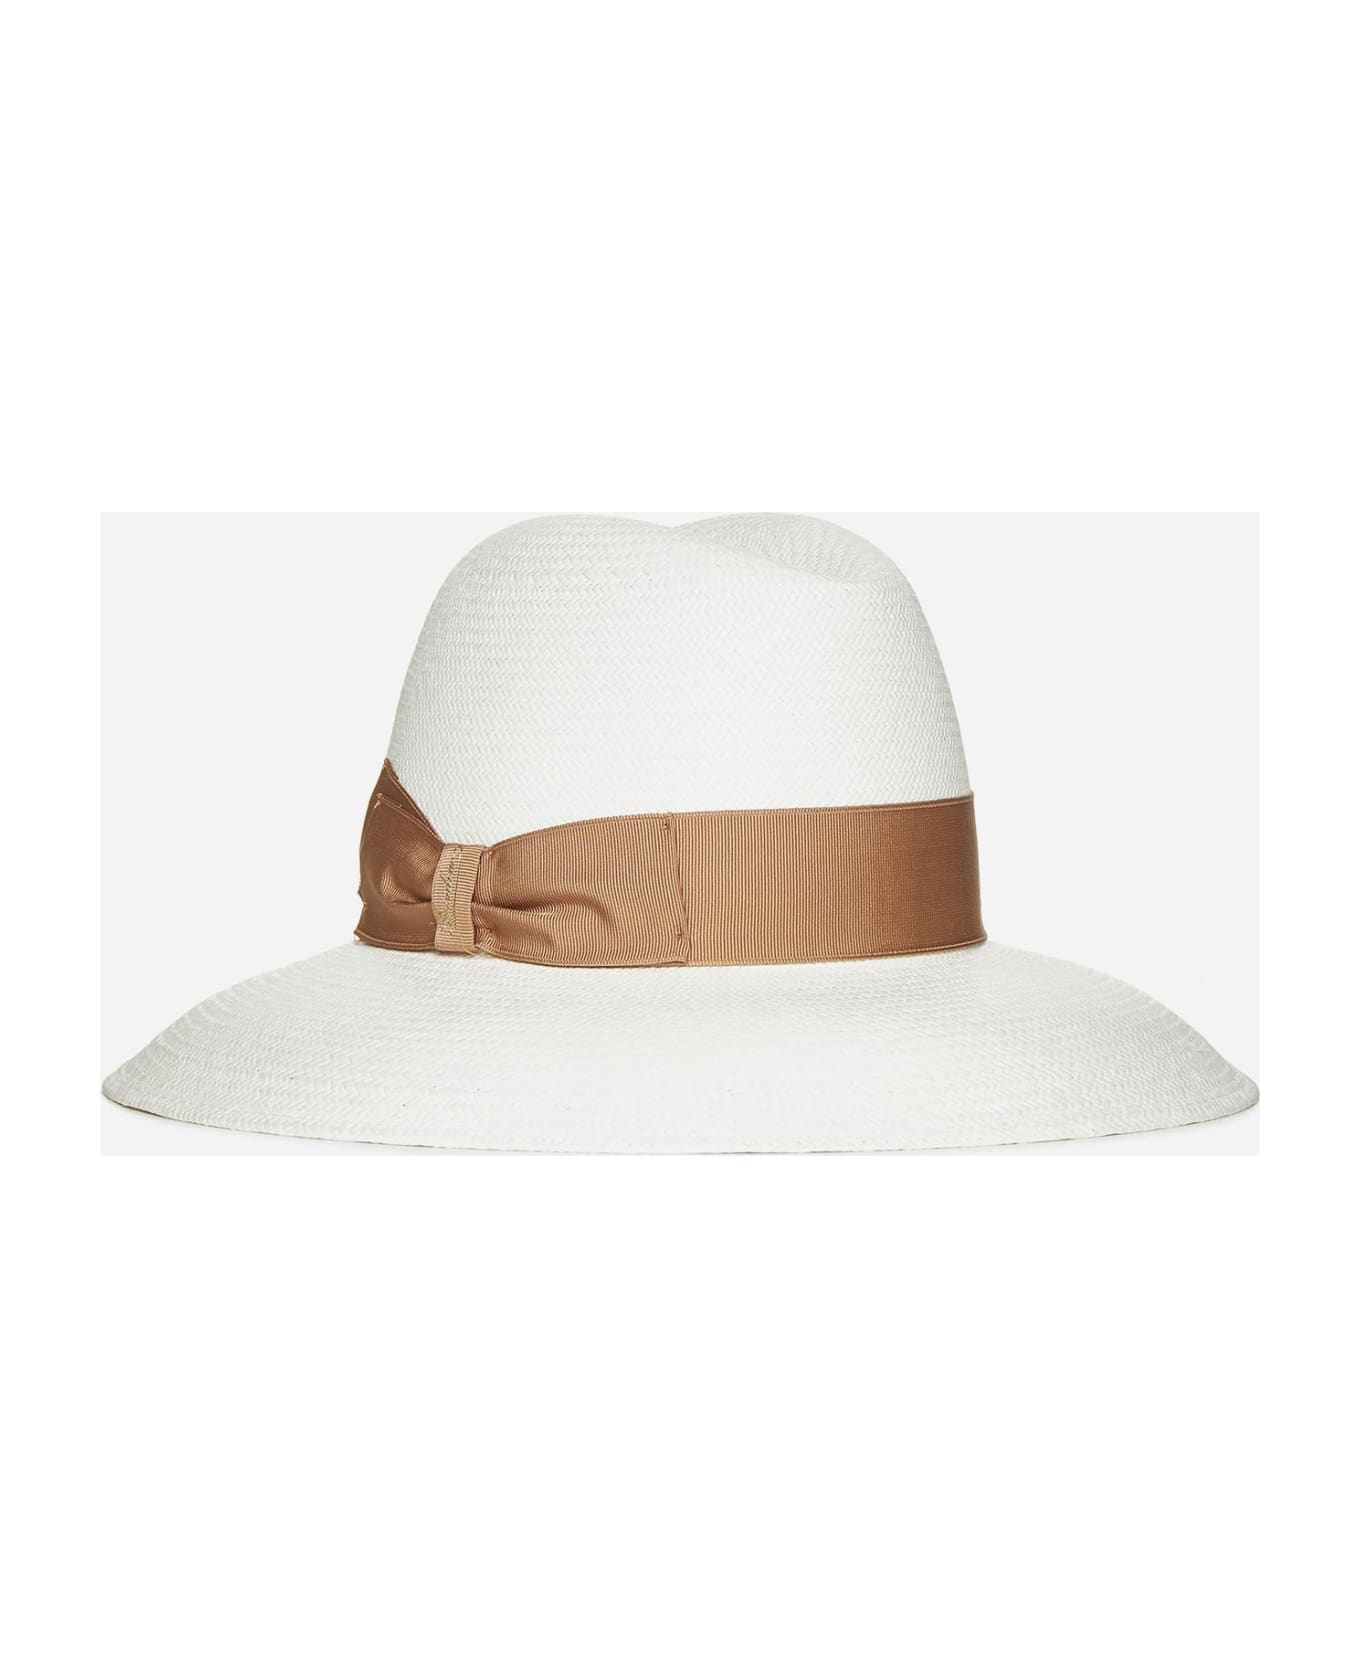 Borsalino Caludette Large Brim Panama Hat - Panna cammello